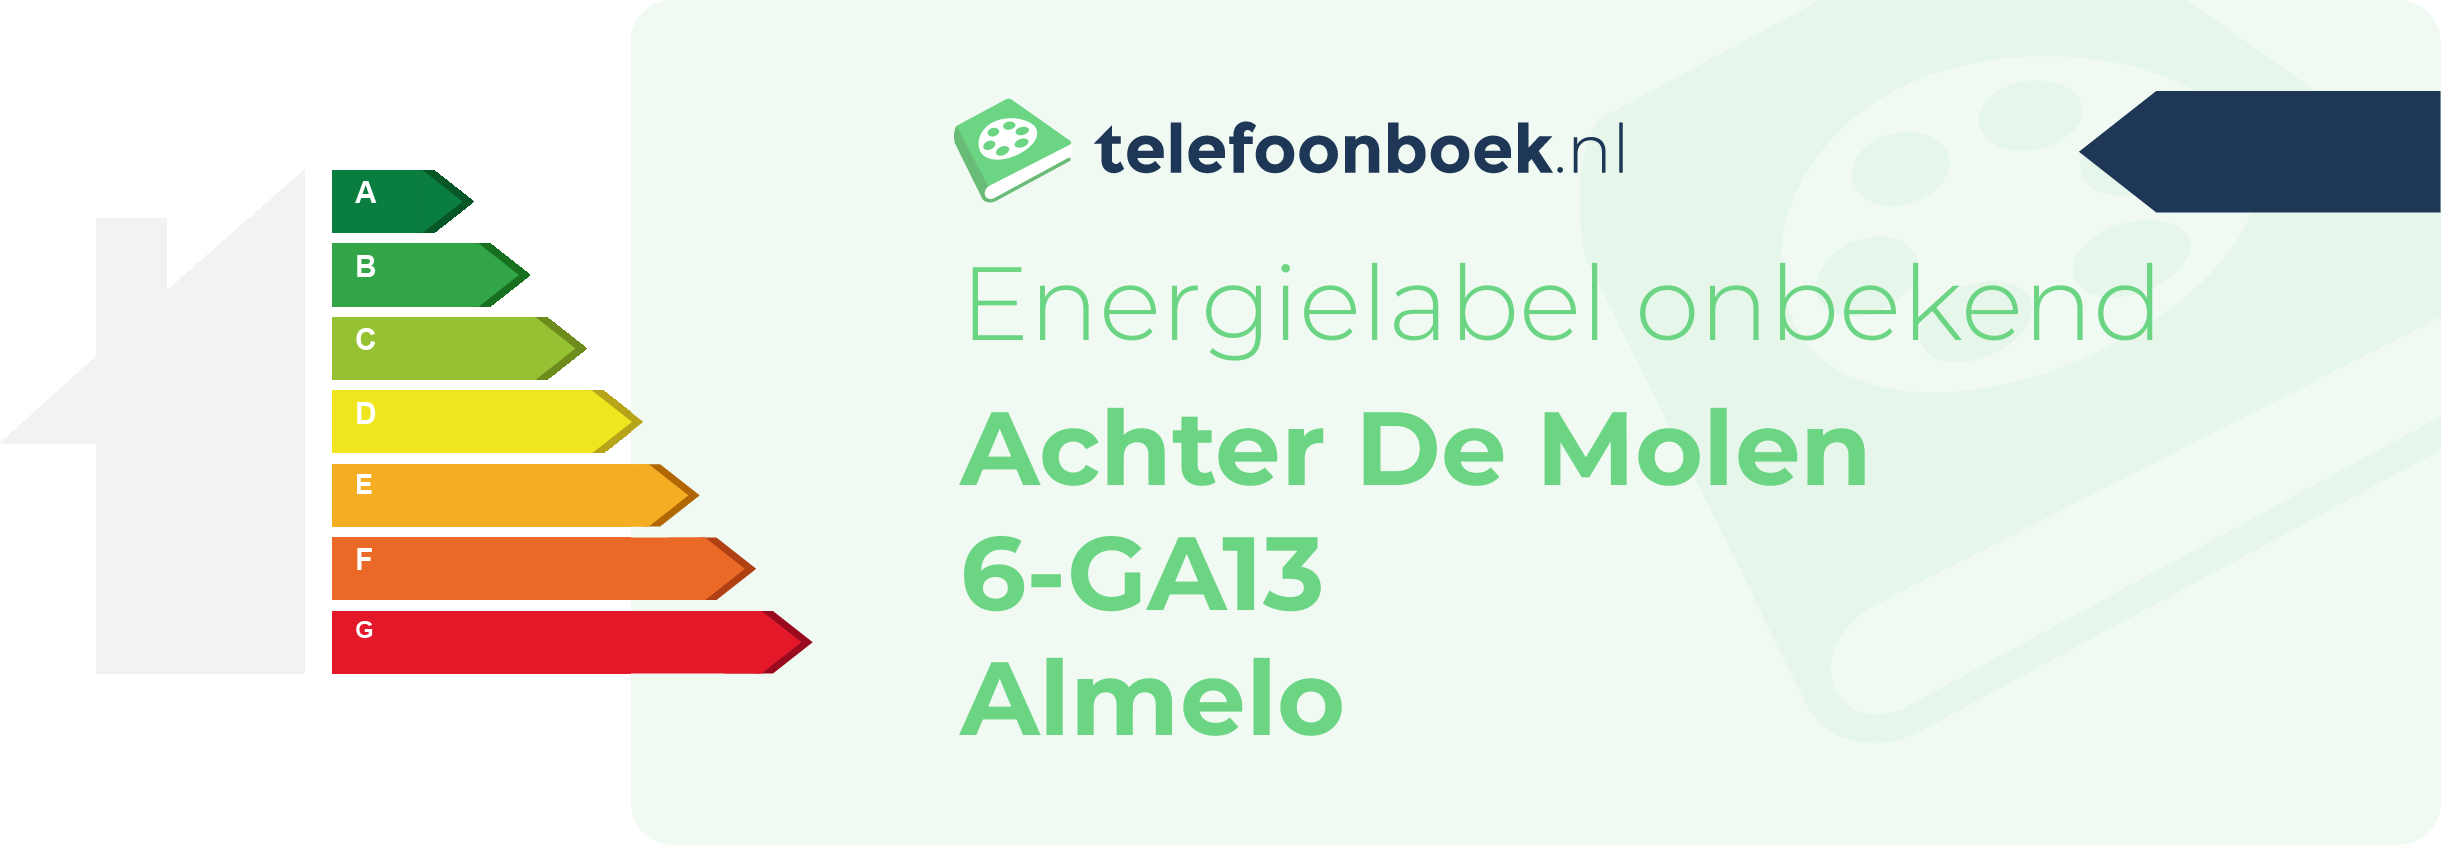 Energielabel Achter De Molen 6-GA13 Almelo